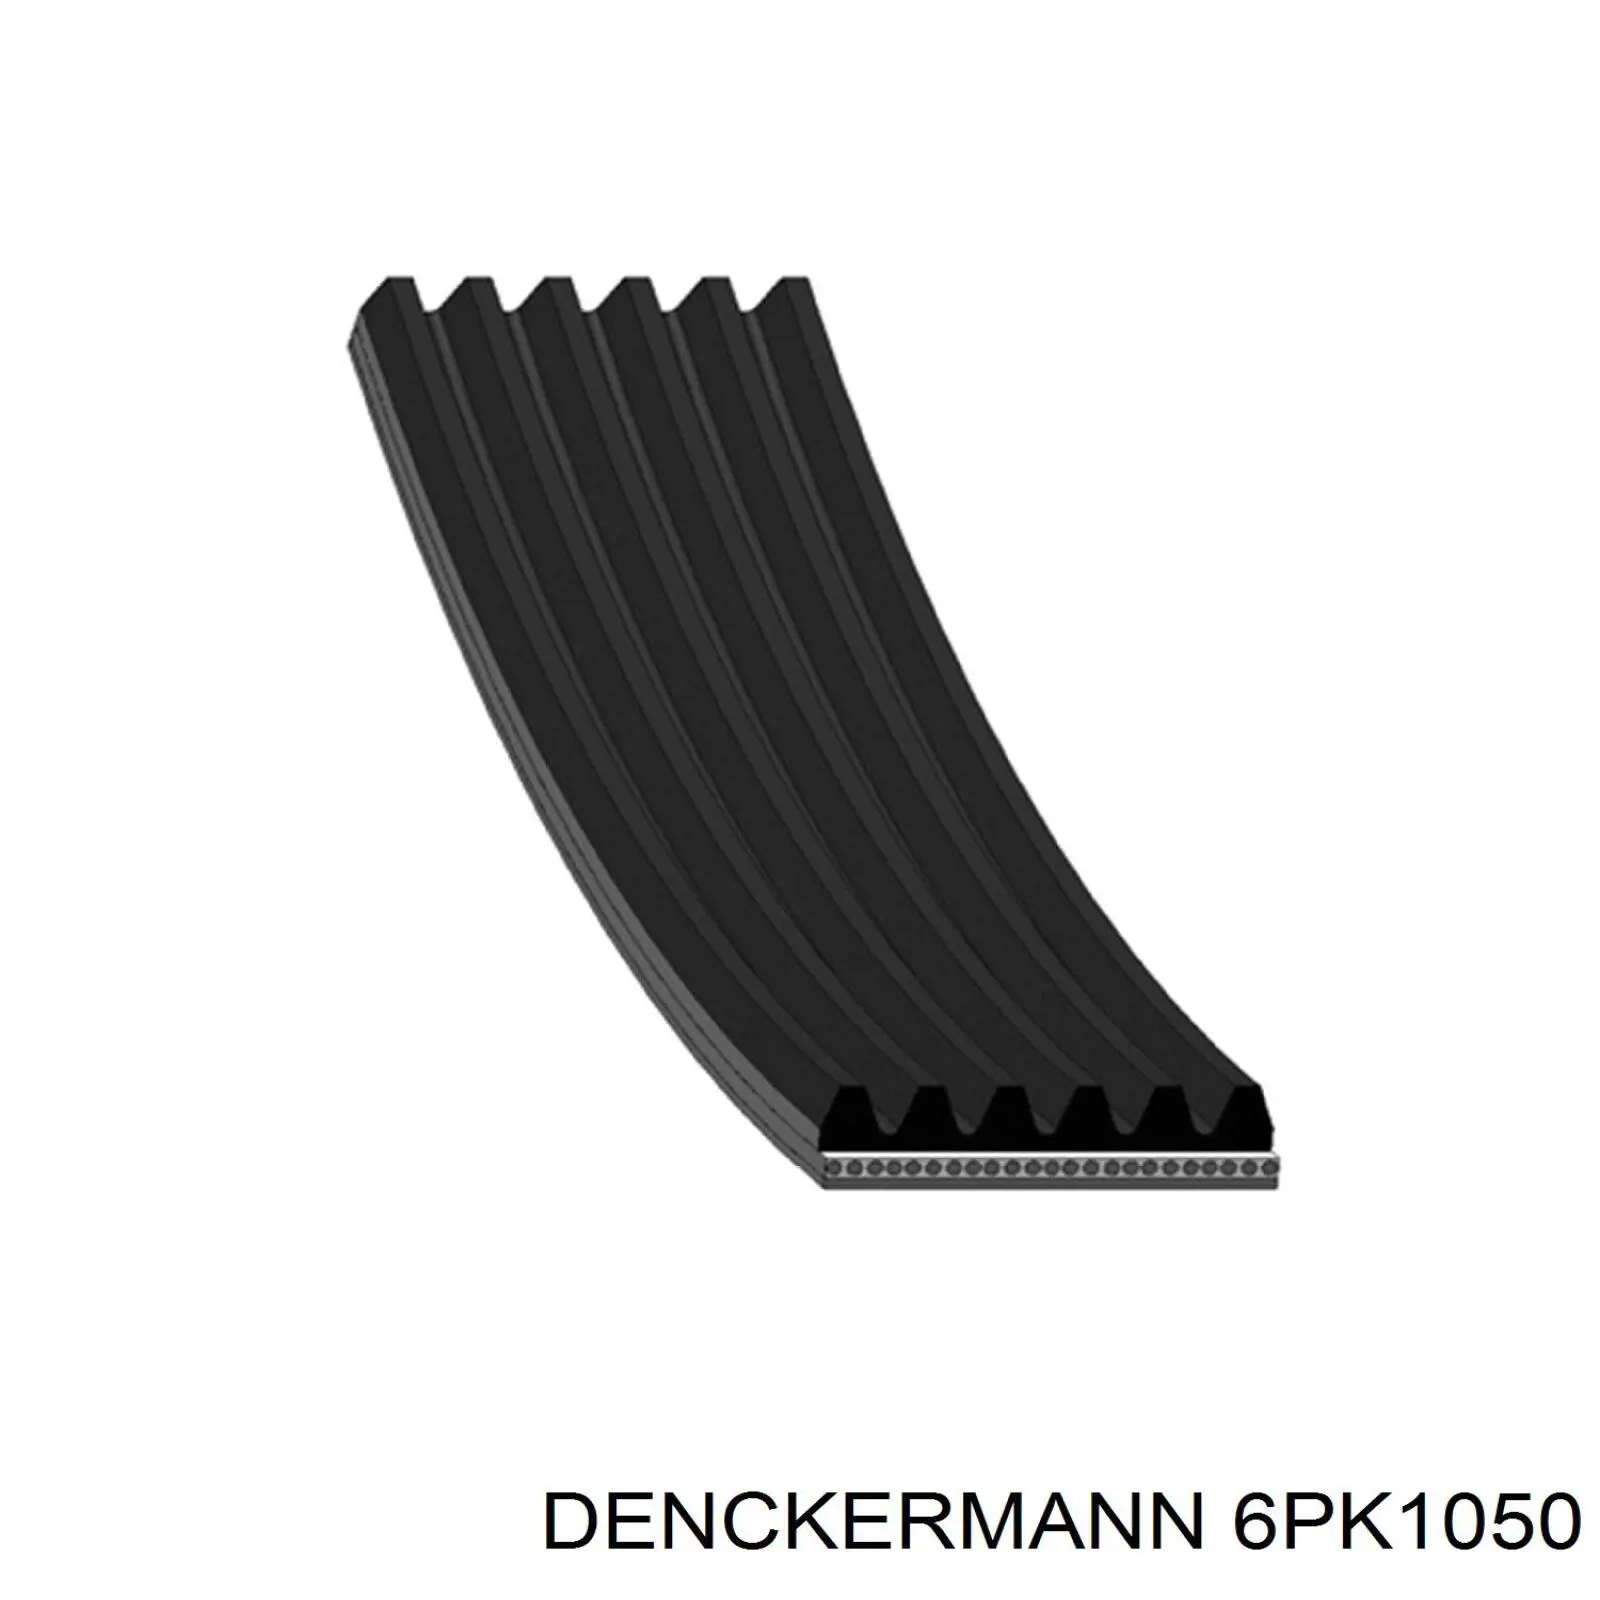 6PK1050 Denckermann correa trapezoidal